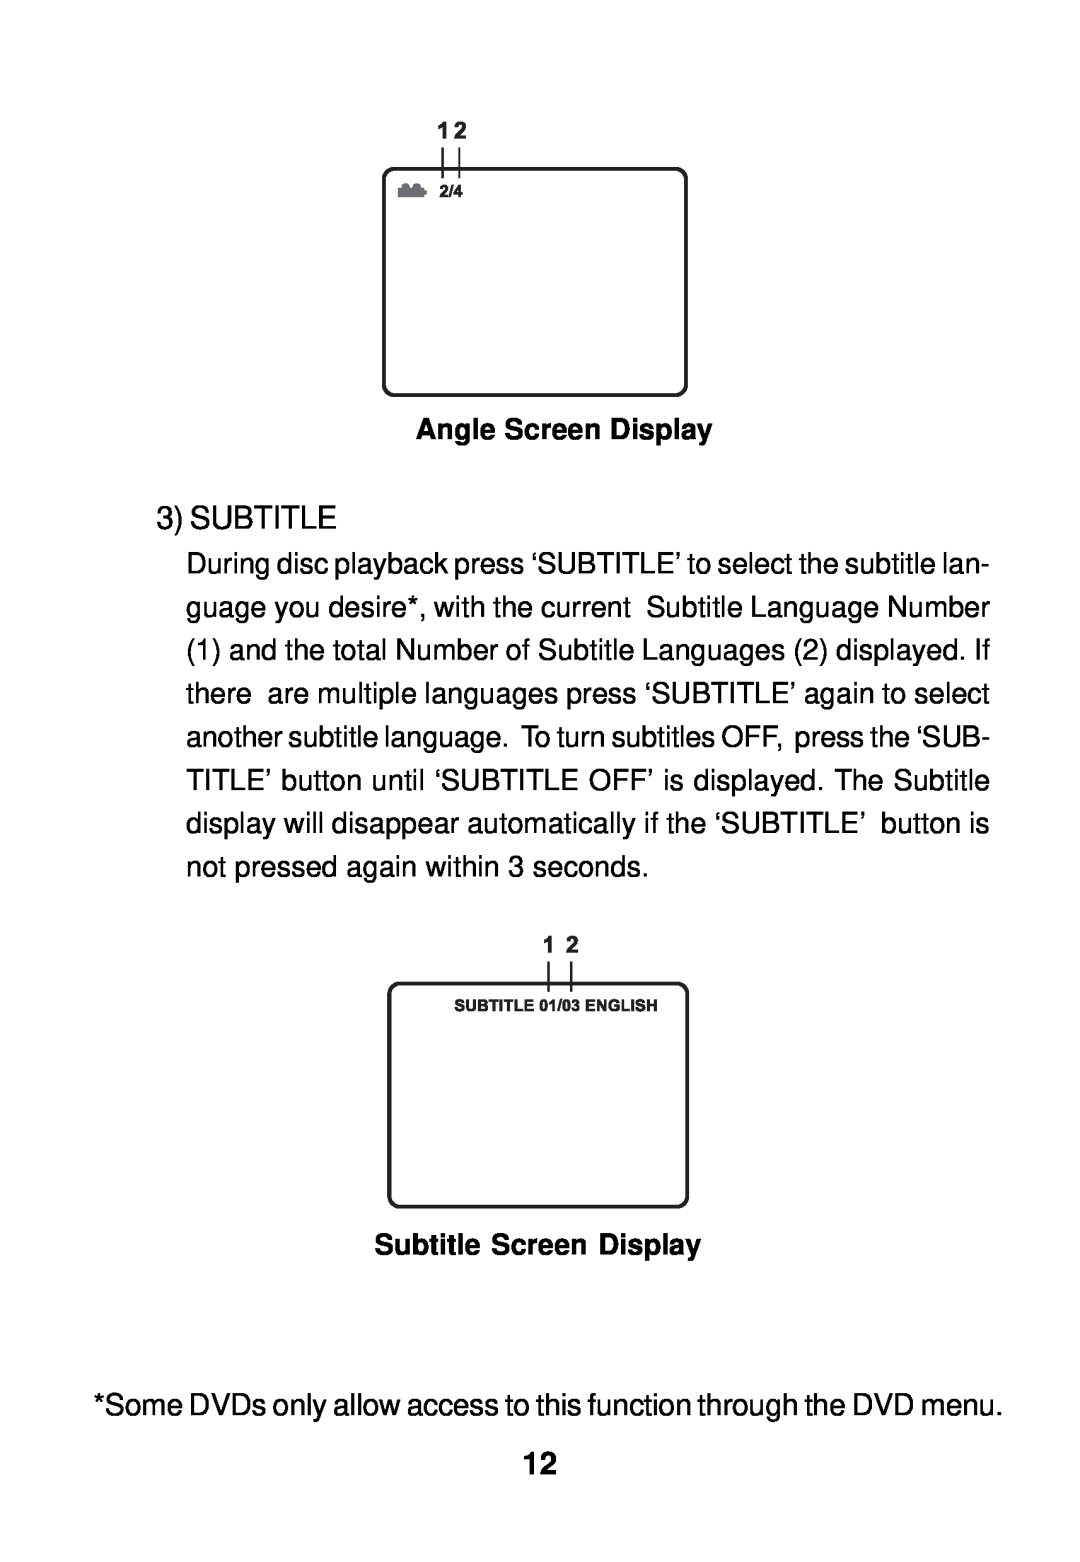 Audiovox AVD300 owner manual Angle Screen Display, Subtitle Screen Display 